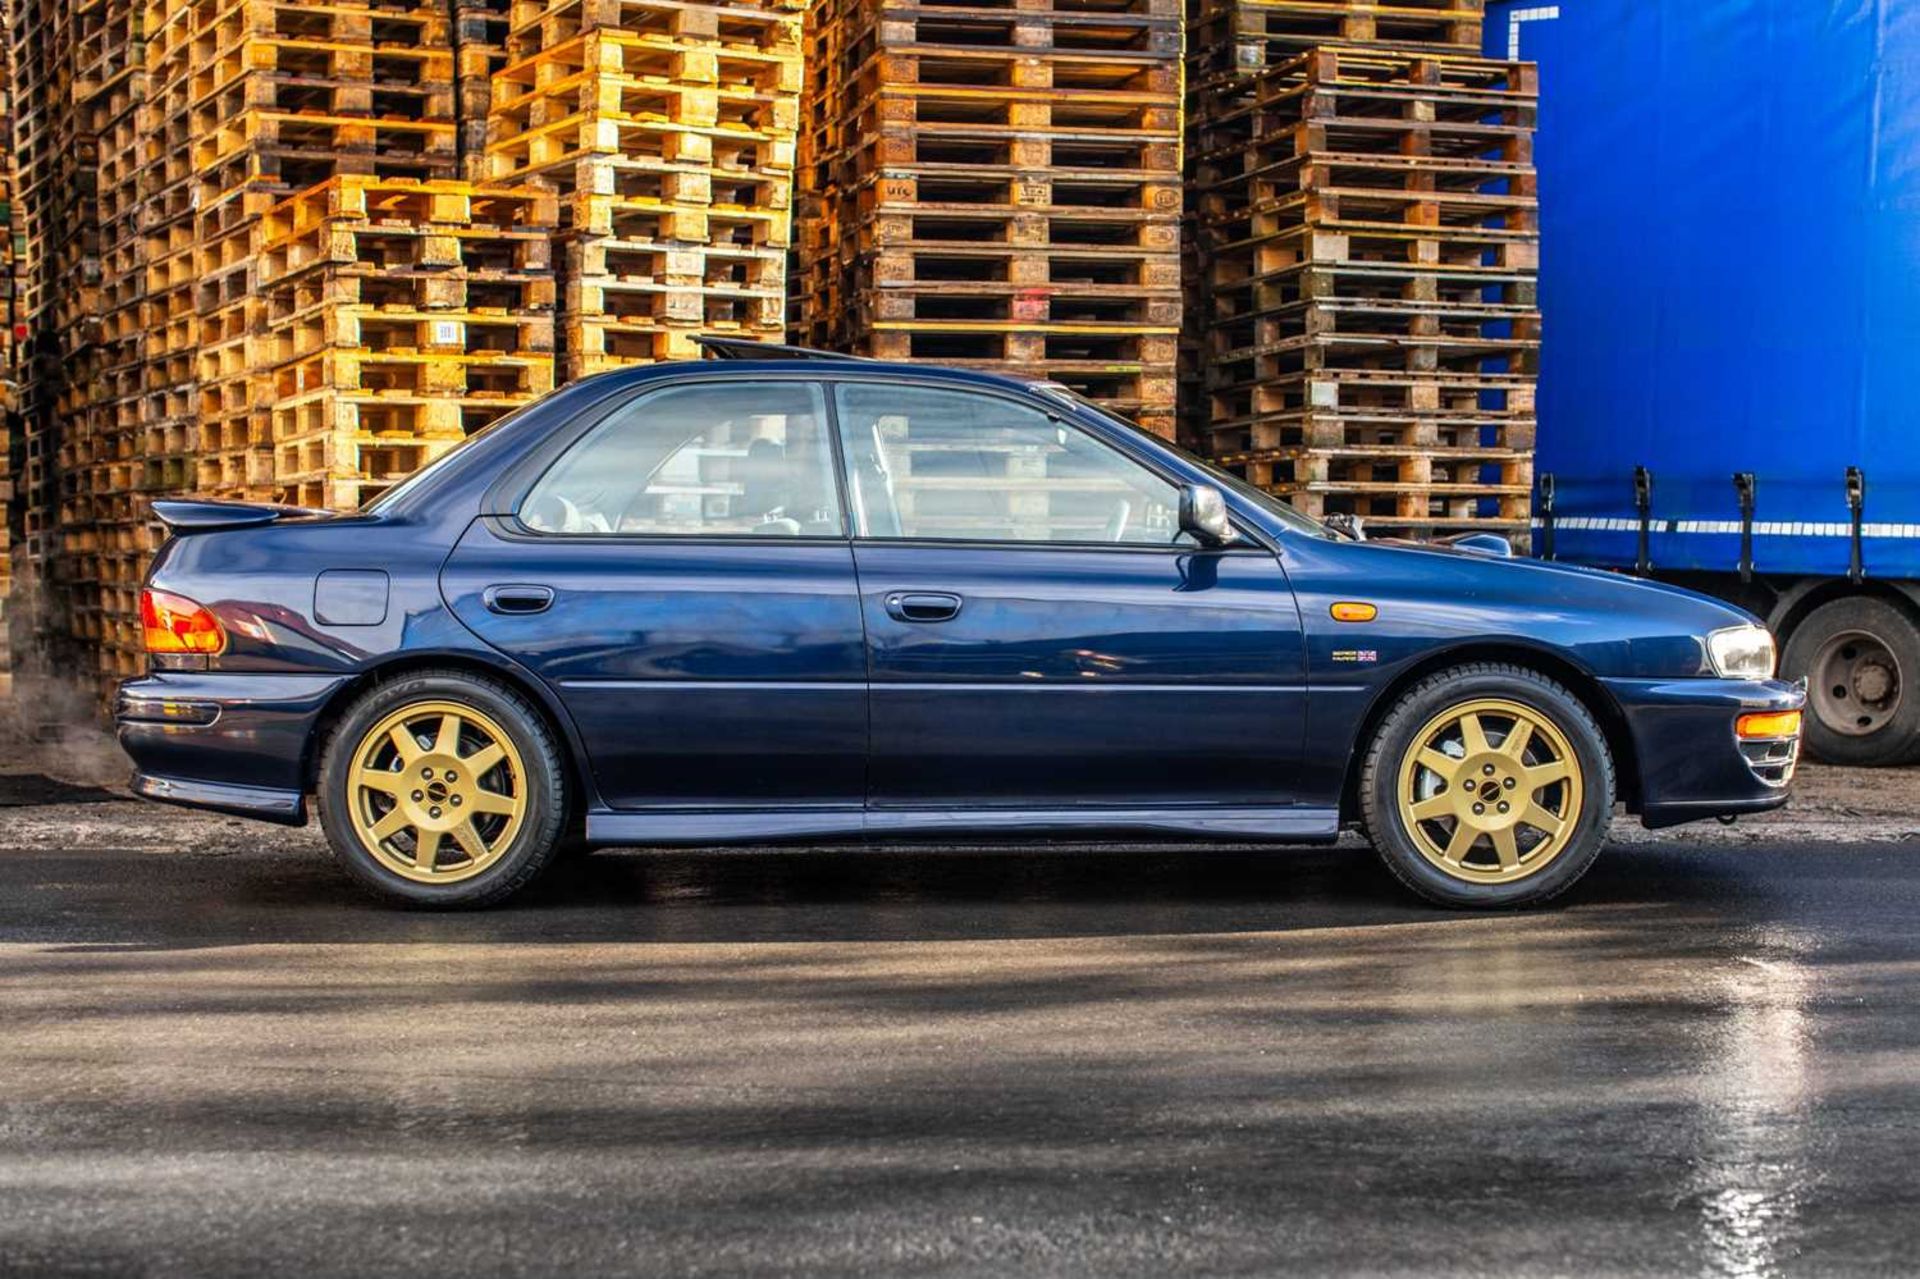 1995 Subaru Impreza Series McRae ***NO RESERVE*** Number 005 of 200 examples prepared by Prodrive - Image 5 of 118